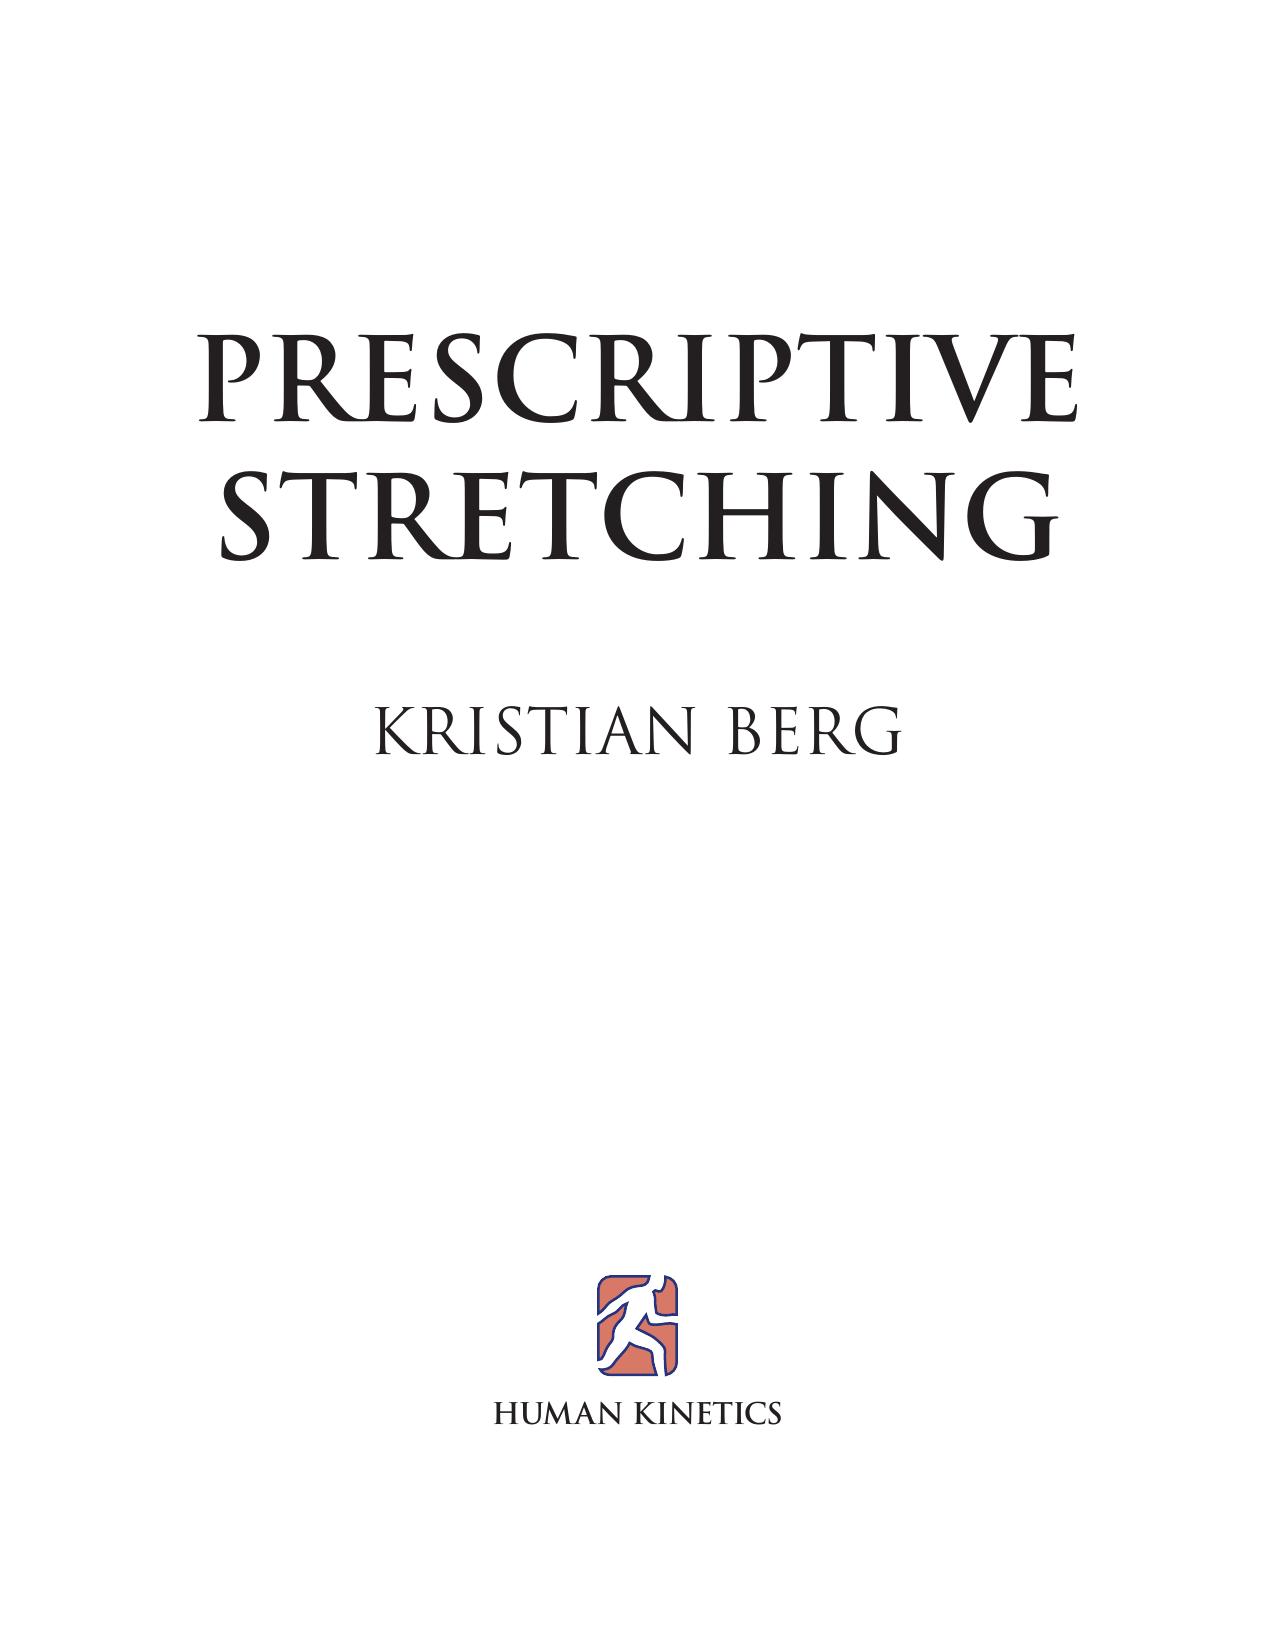 Prescriptive Stretching by Kristian Berg